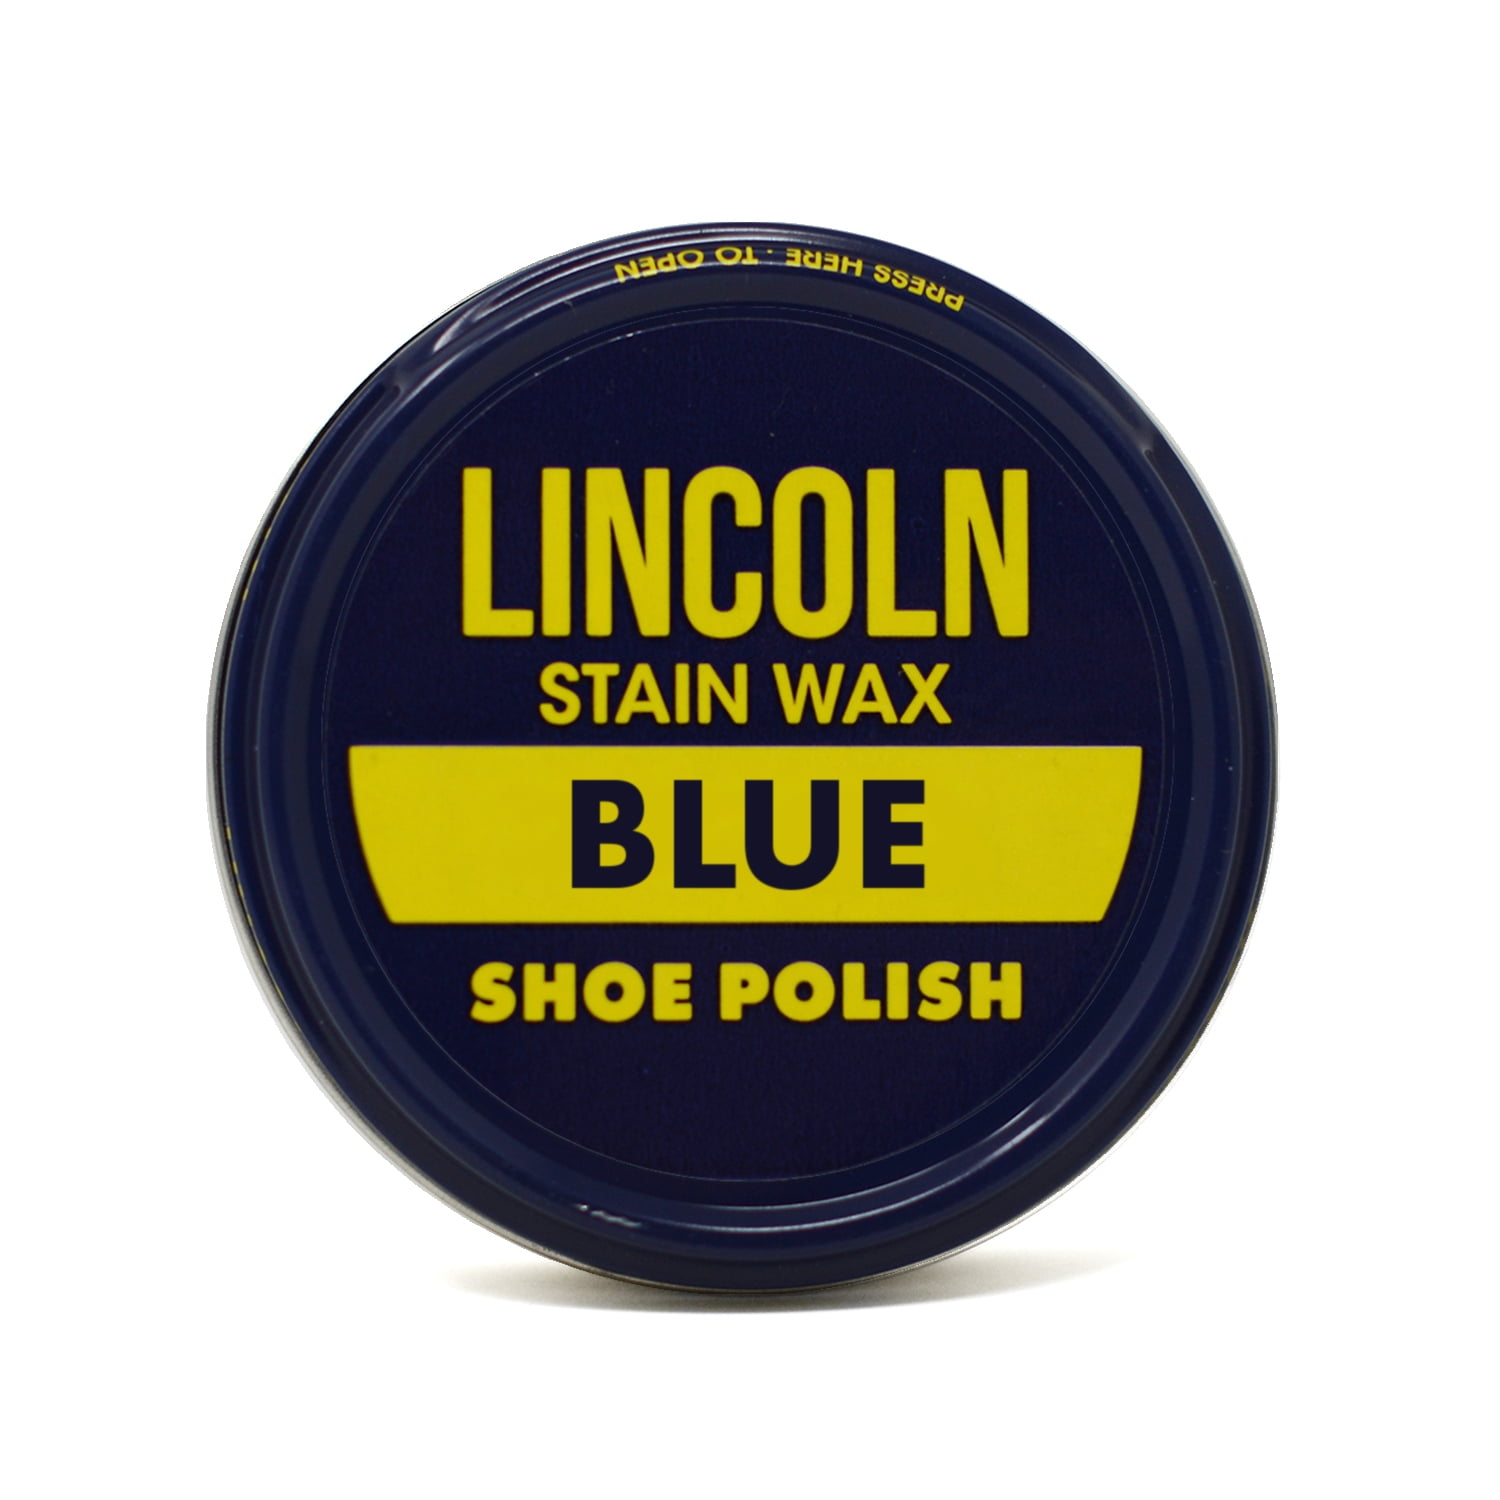 Lincoln Stain Wax Shoe Polish 2 1/8 oz 